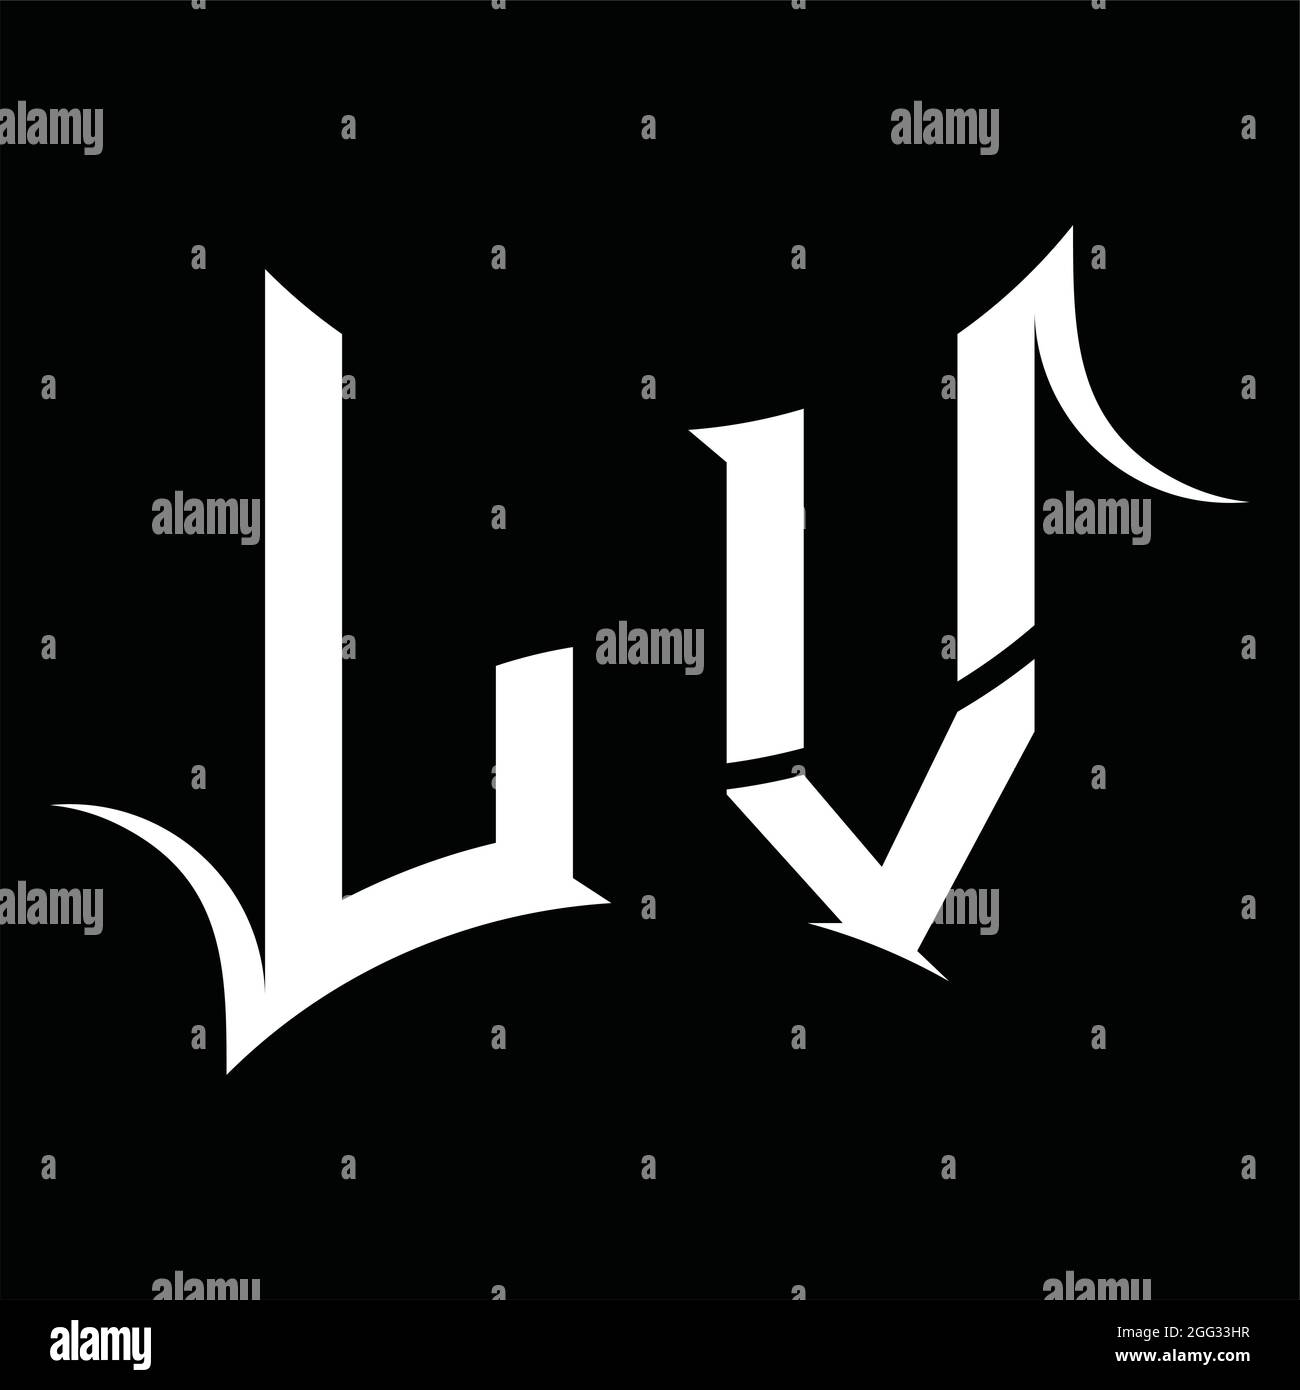 Lv logo monogram with emblem shield style design Vector Image